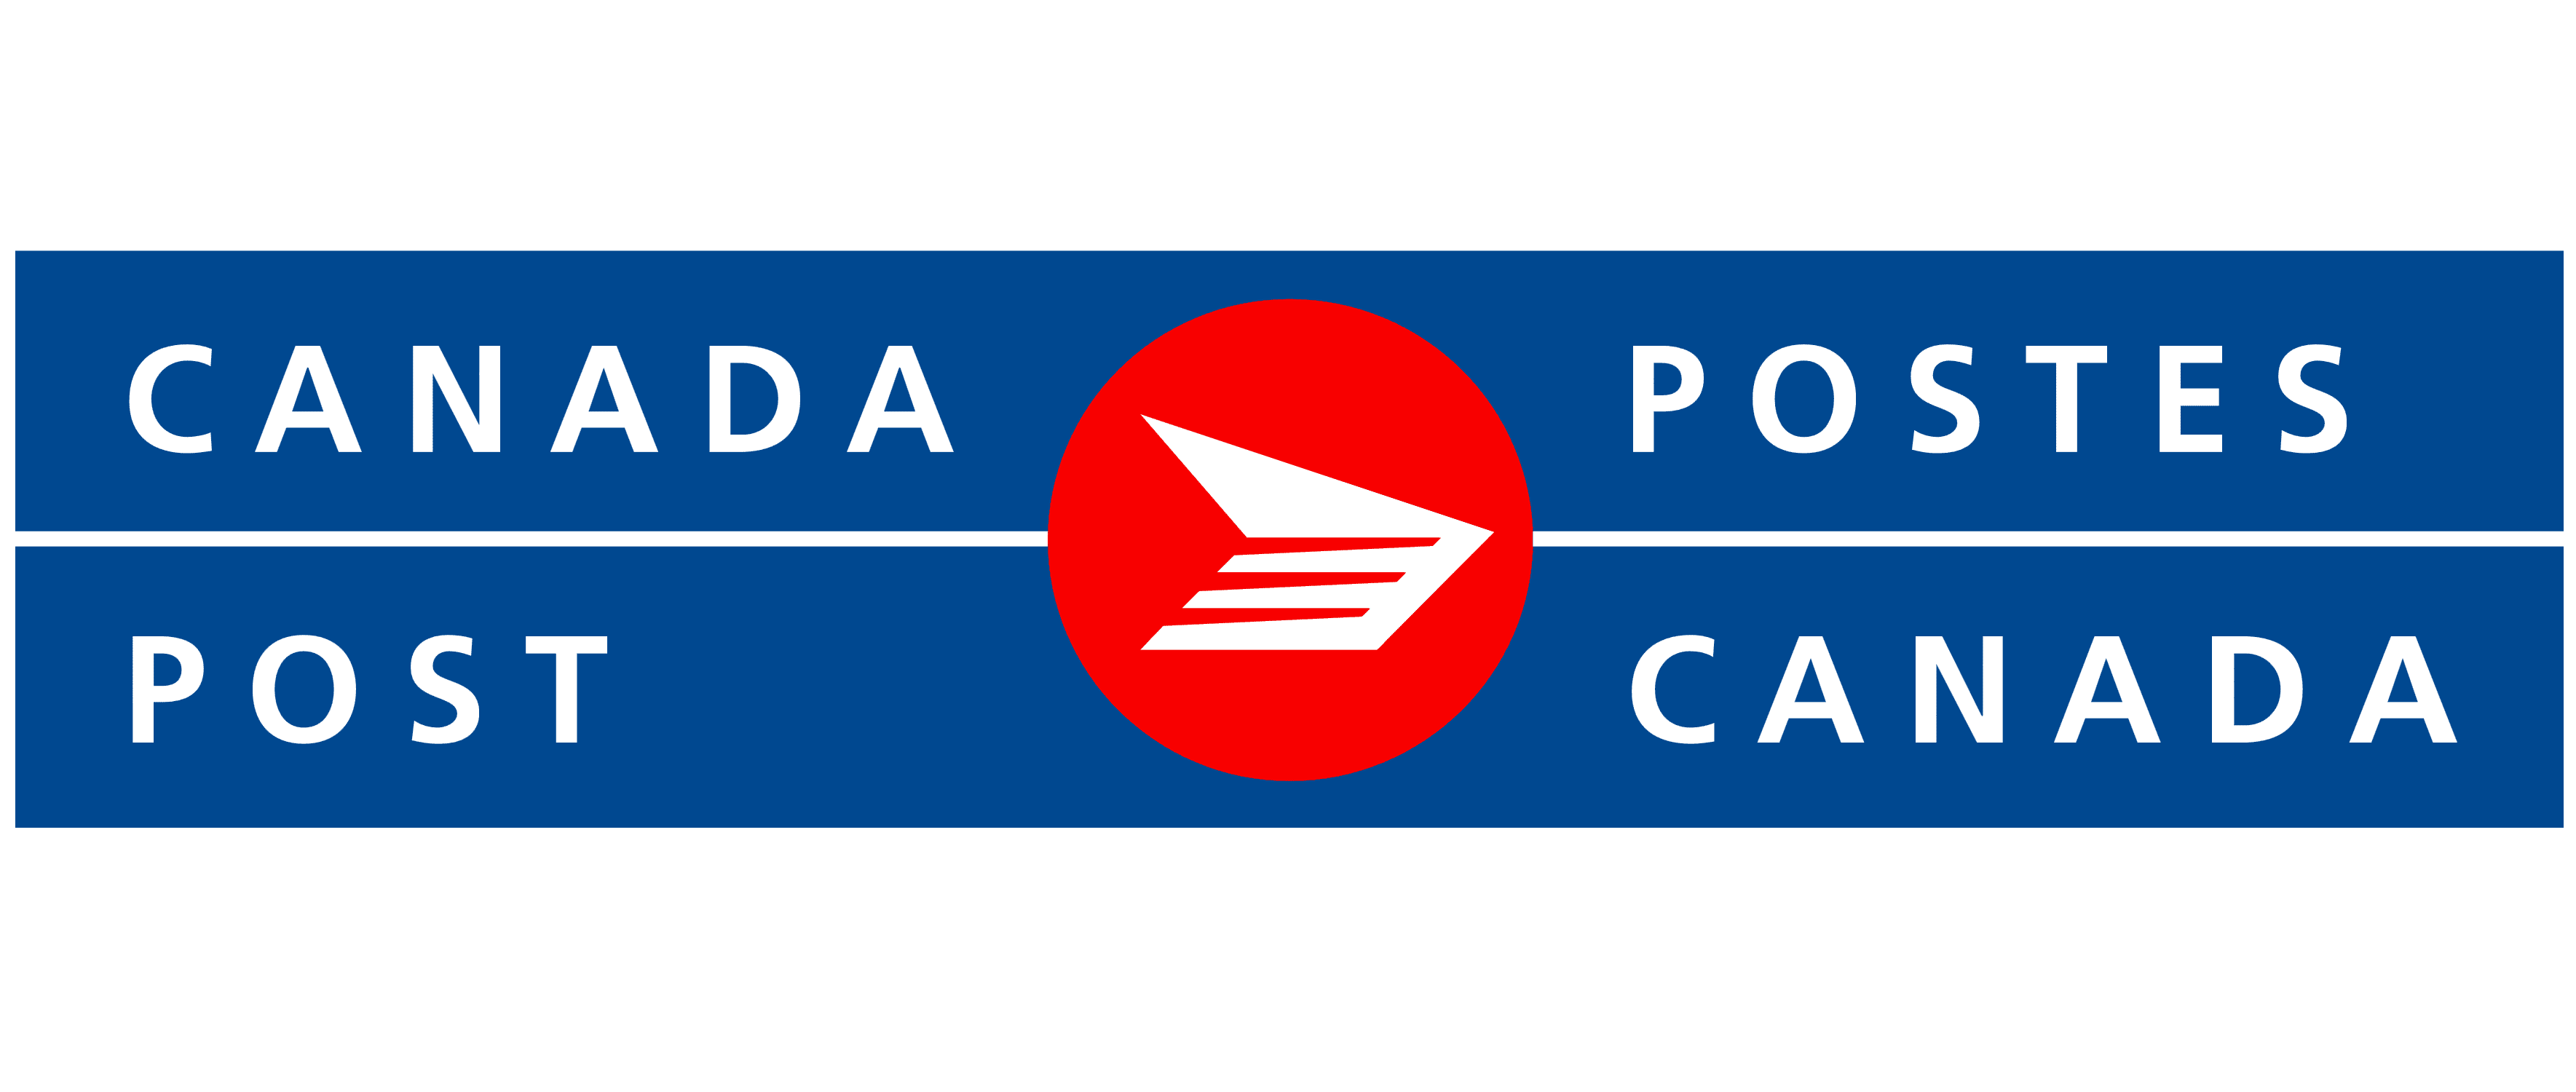 Canada Post Brand Logo